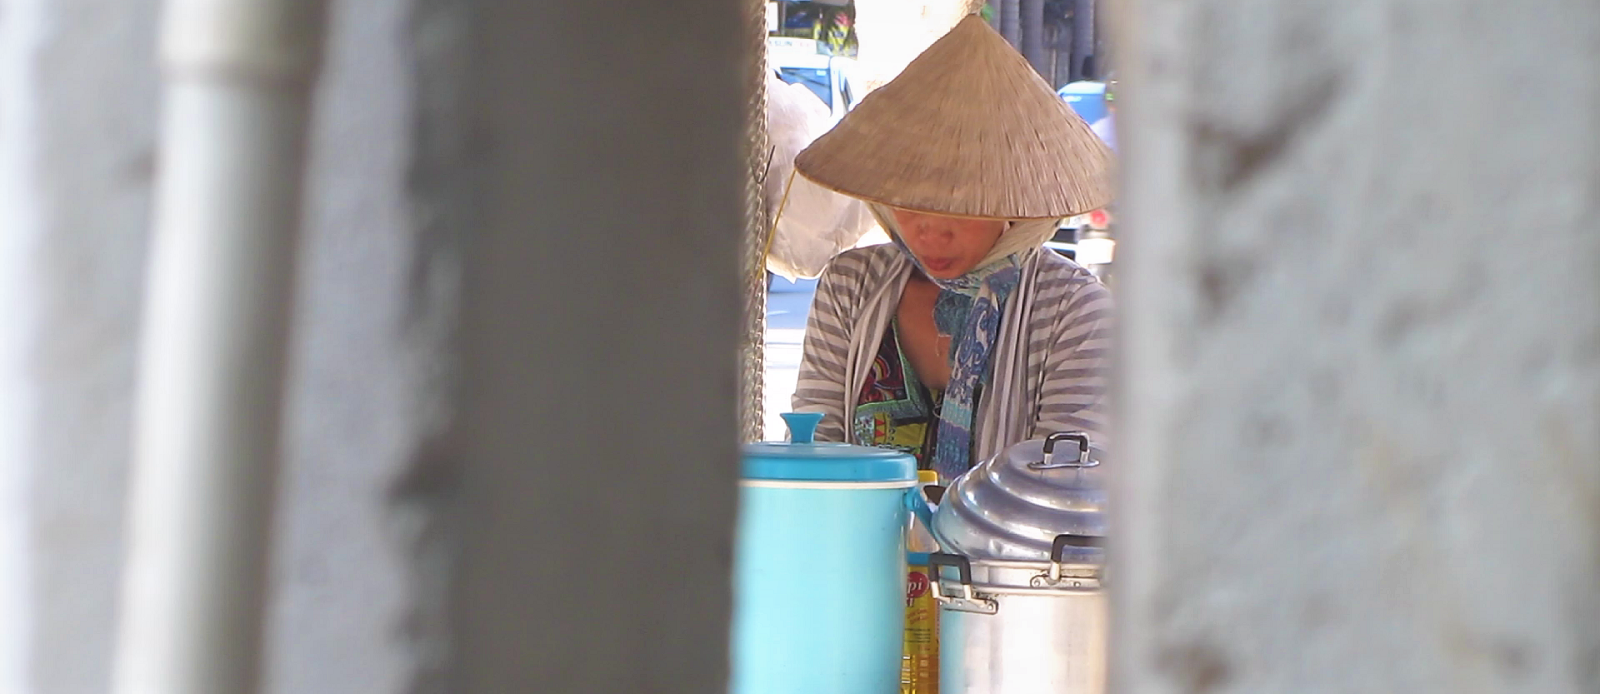 Film: A Day in Saigon, Redux